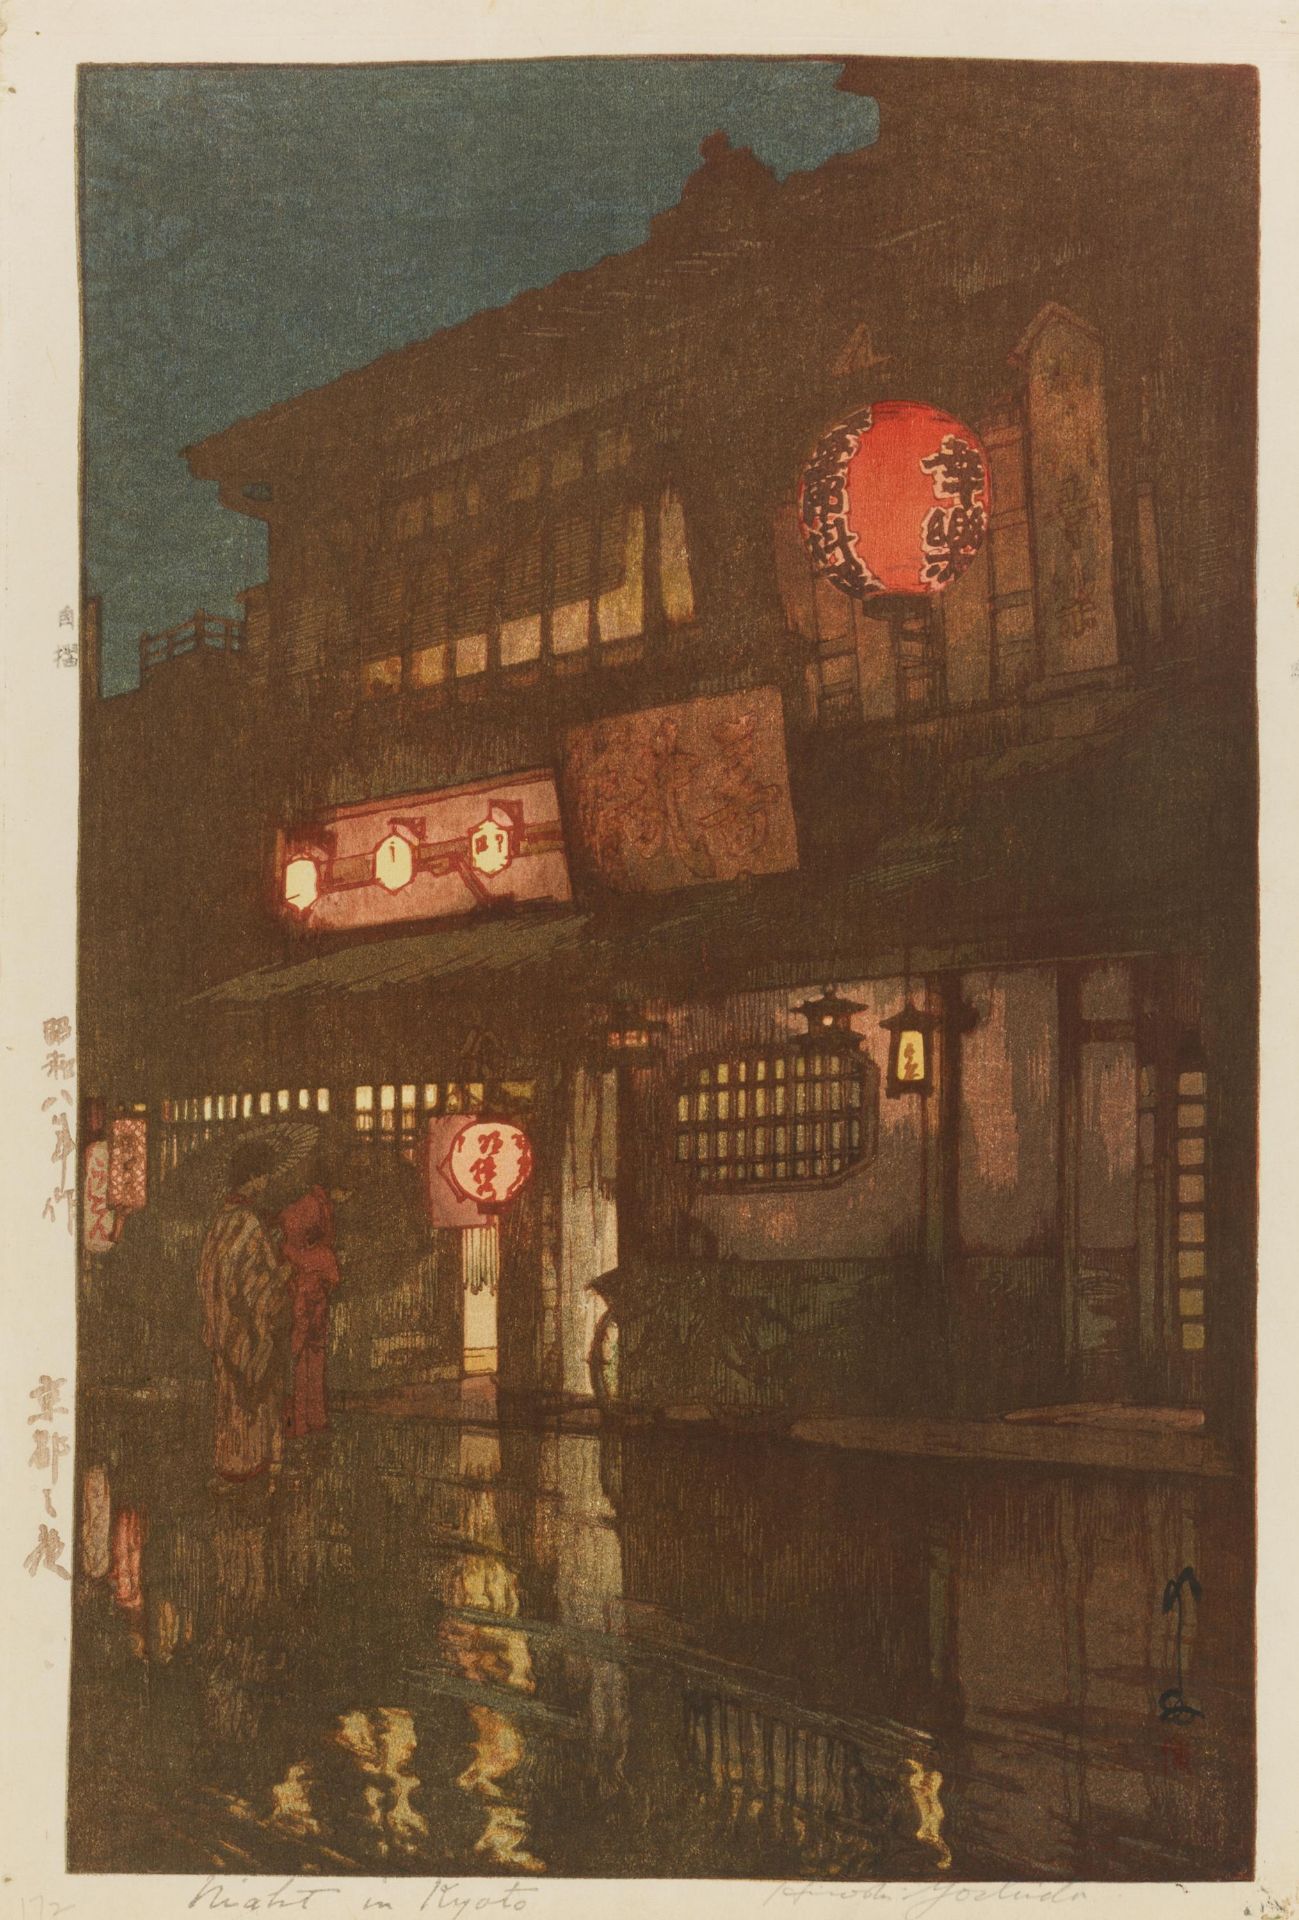 YOSHIDA, HIROSHI1876 - 1950Zwei Holzschnitte. Japan. Shôwa-Zeit. Nishiki-e. Ôban, tate-e. a) "